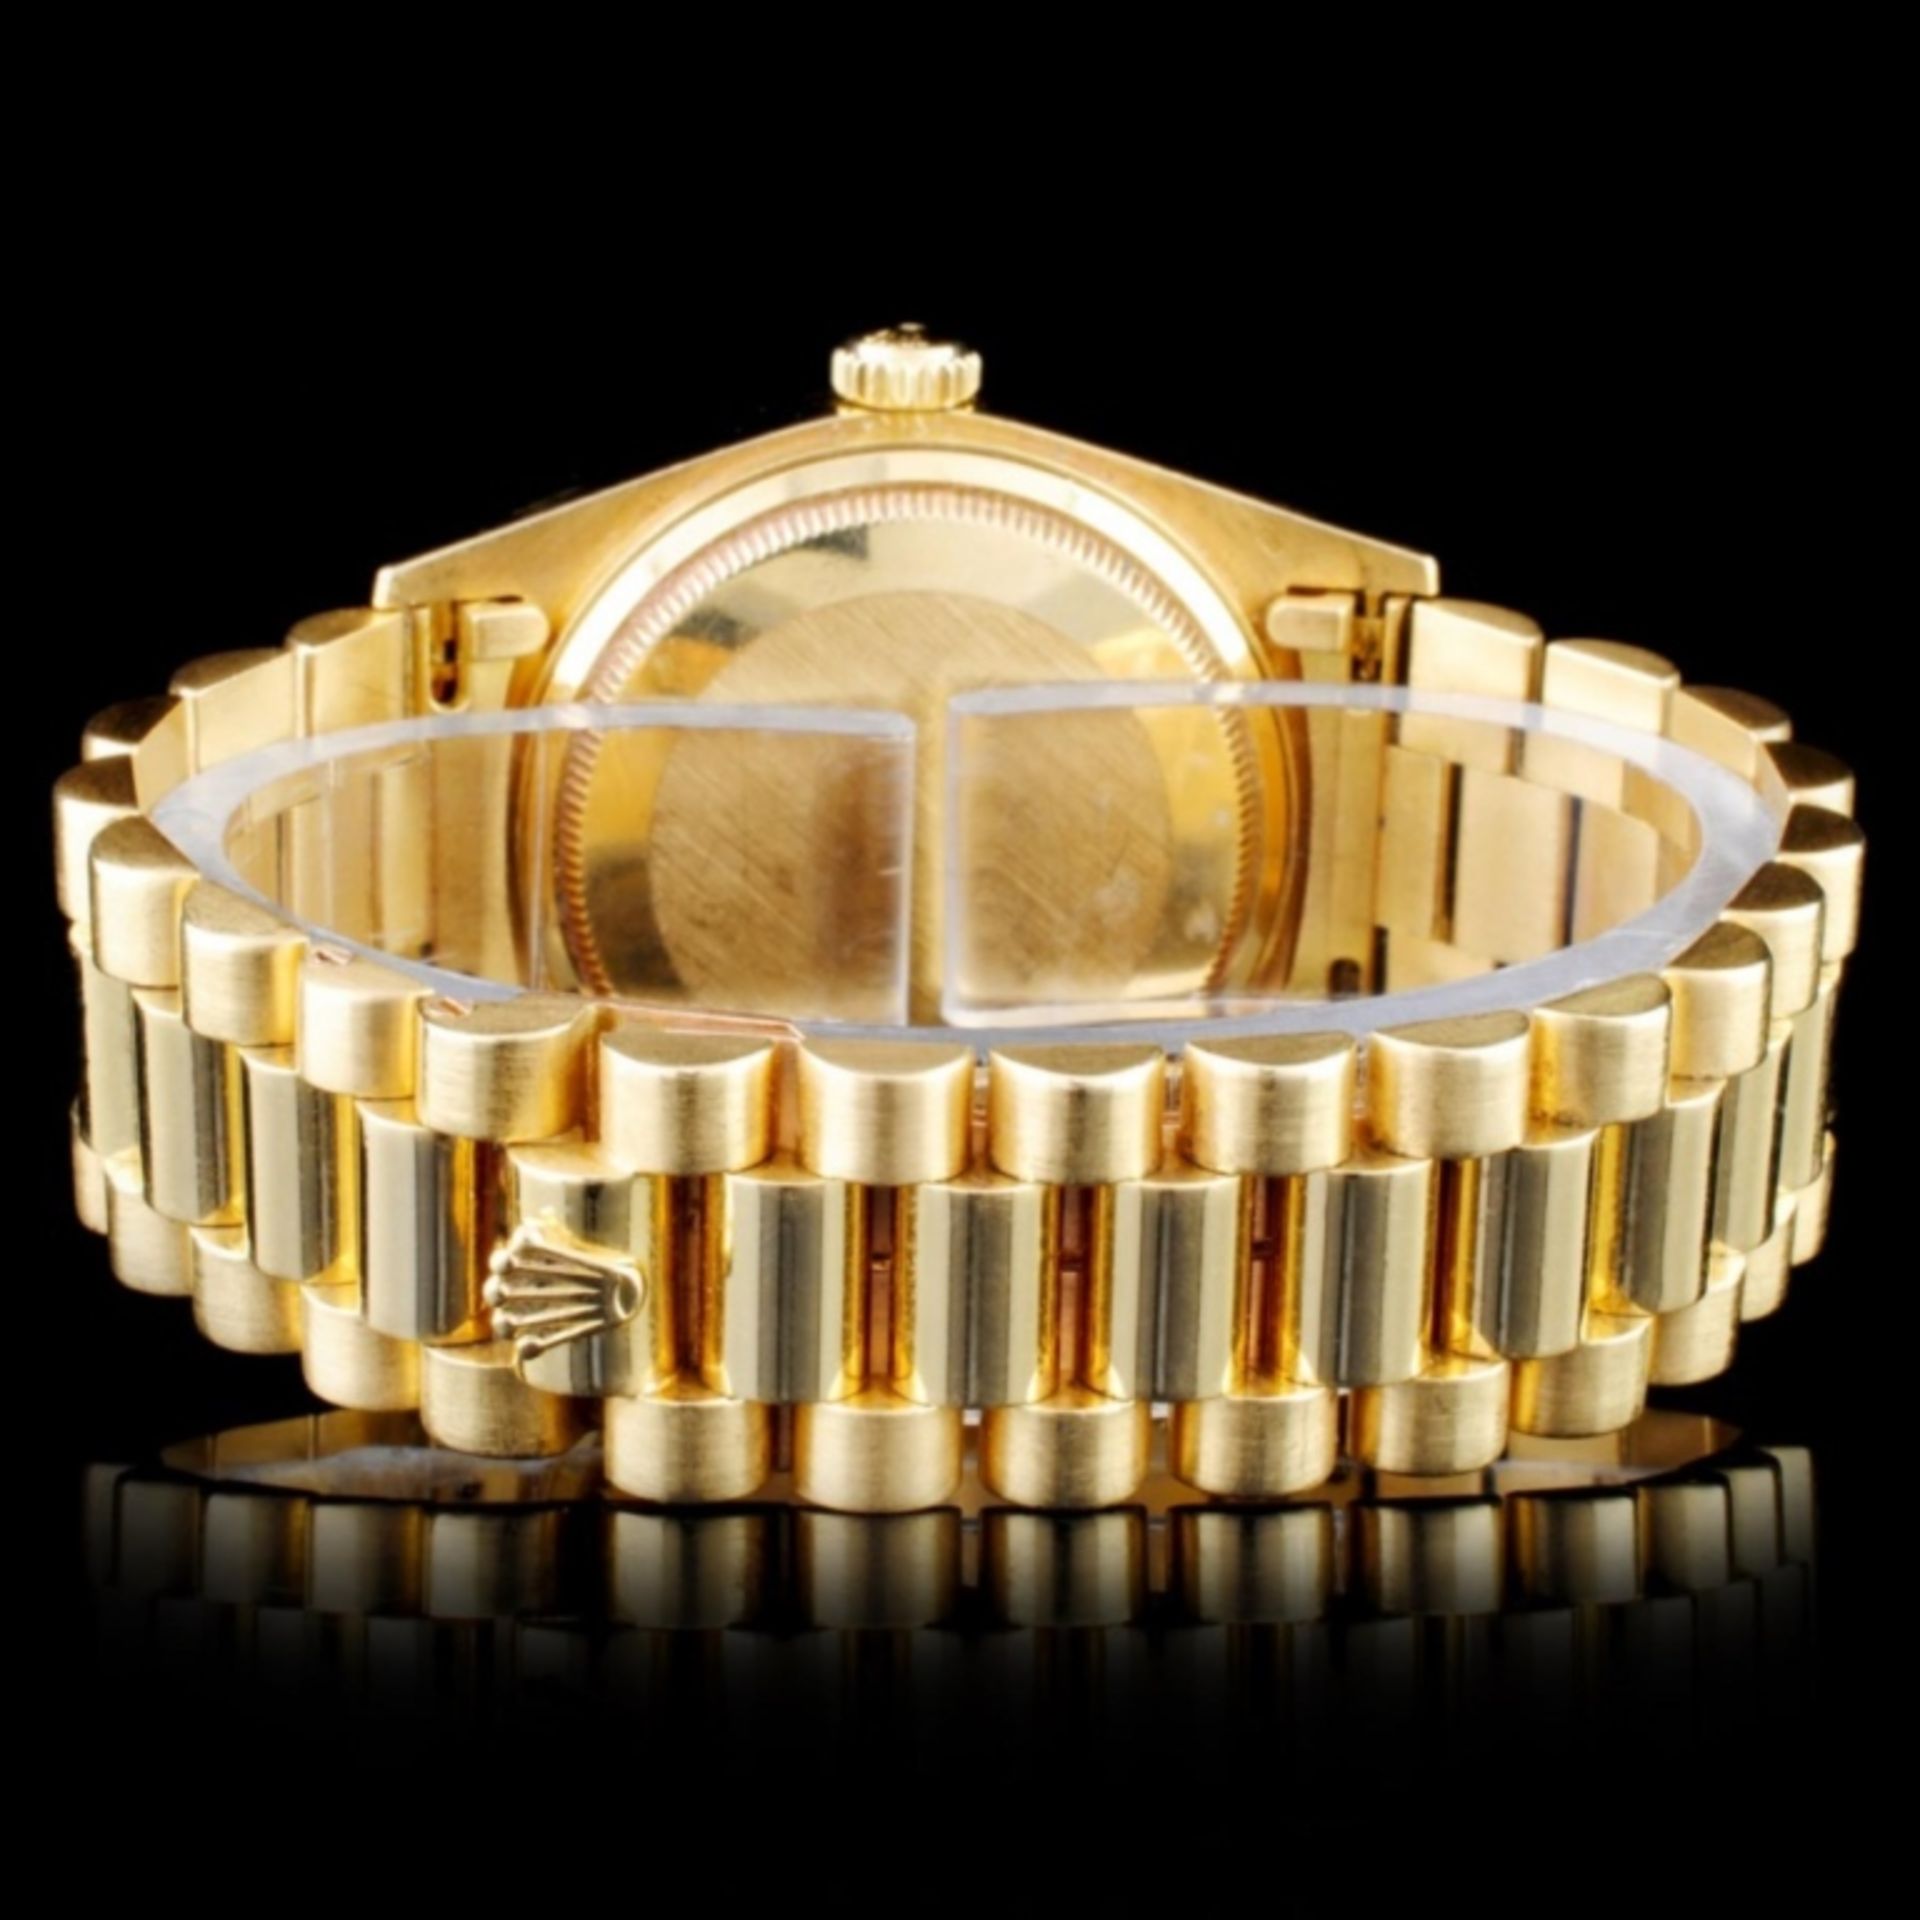 Rolex 18K YG Day-Date Diamond 36MM Watch - Image 3 of 5